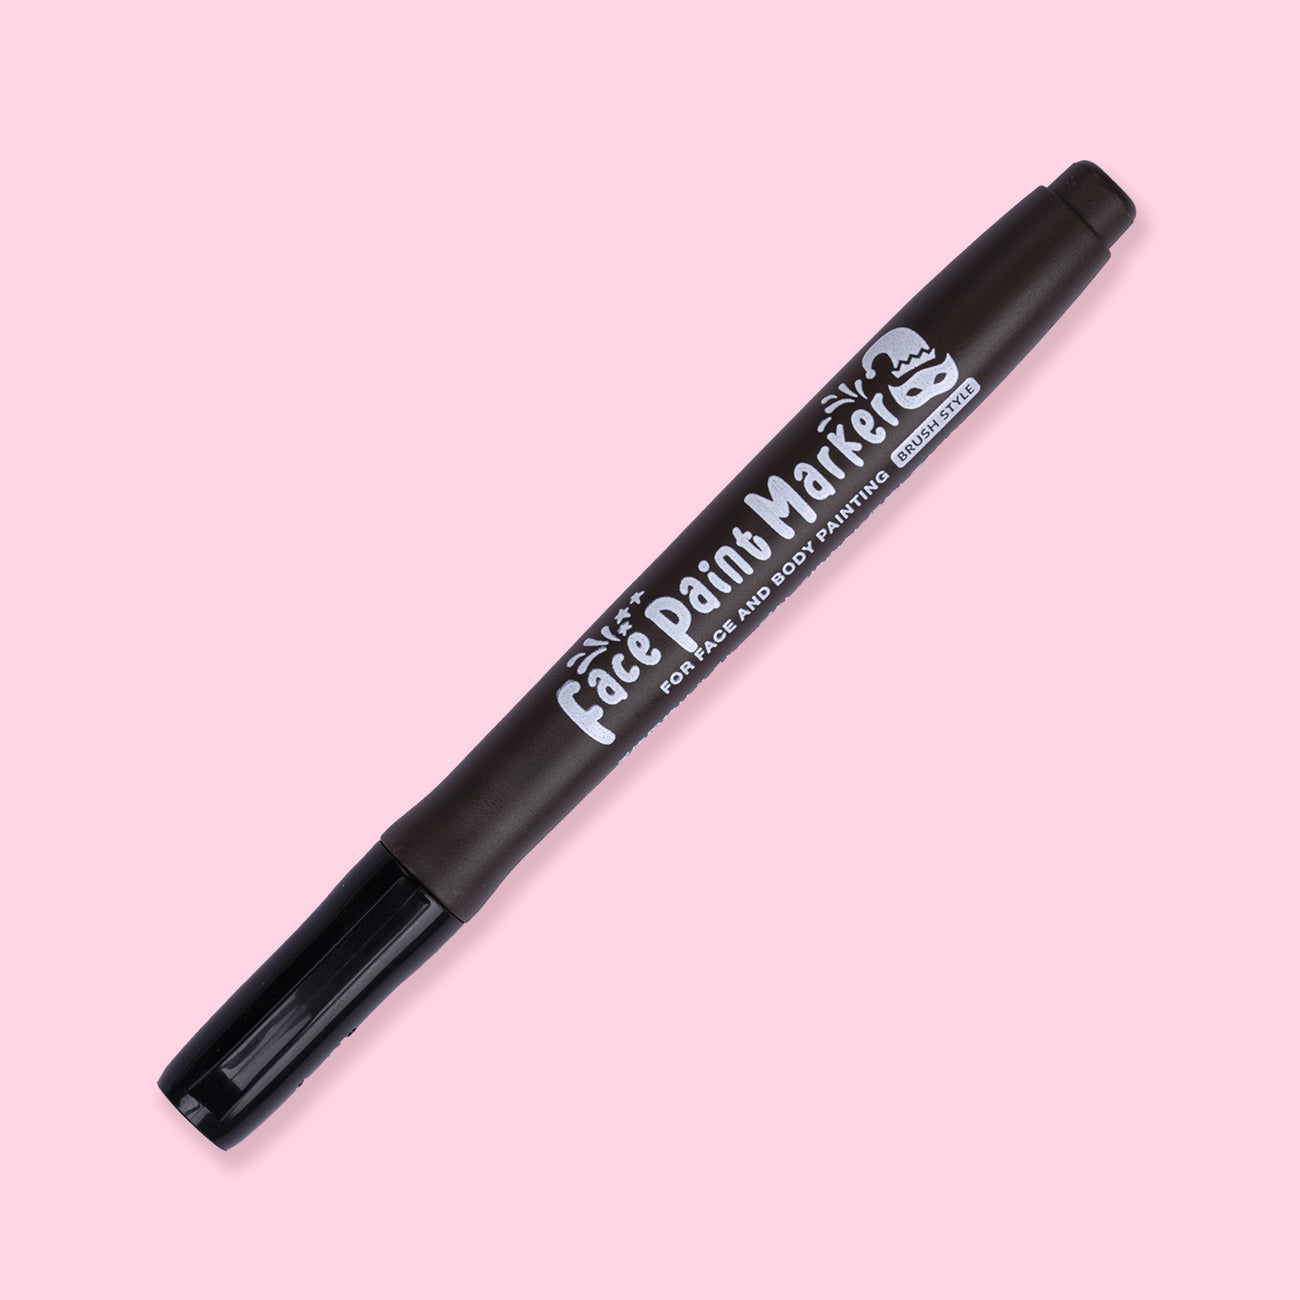 Shachihata Face Paint Brush Marker - Black